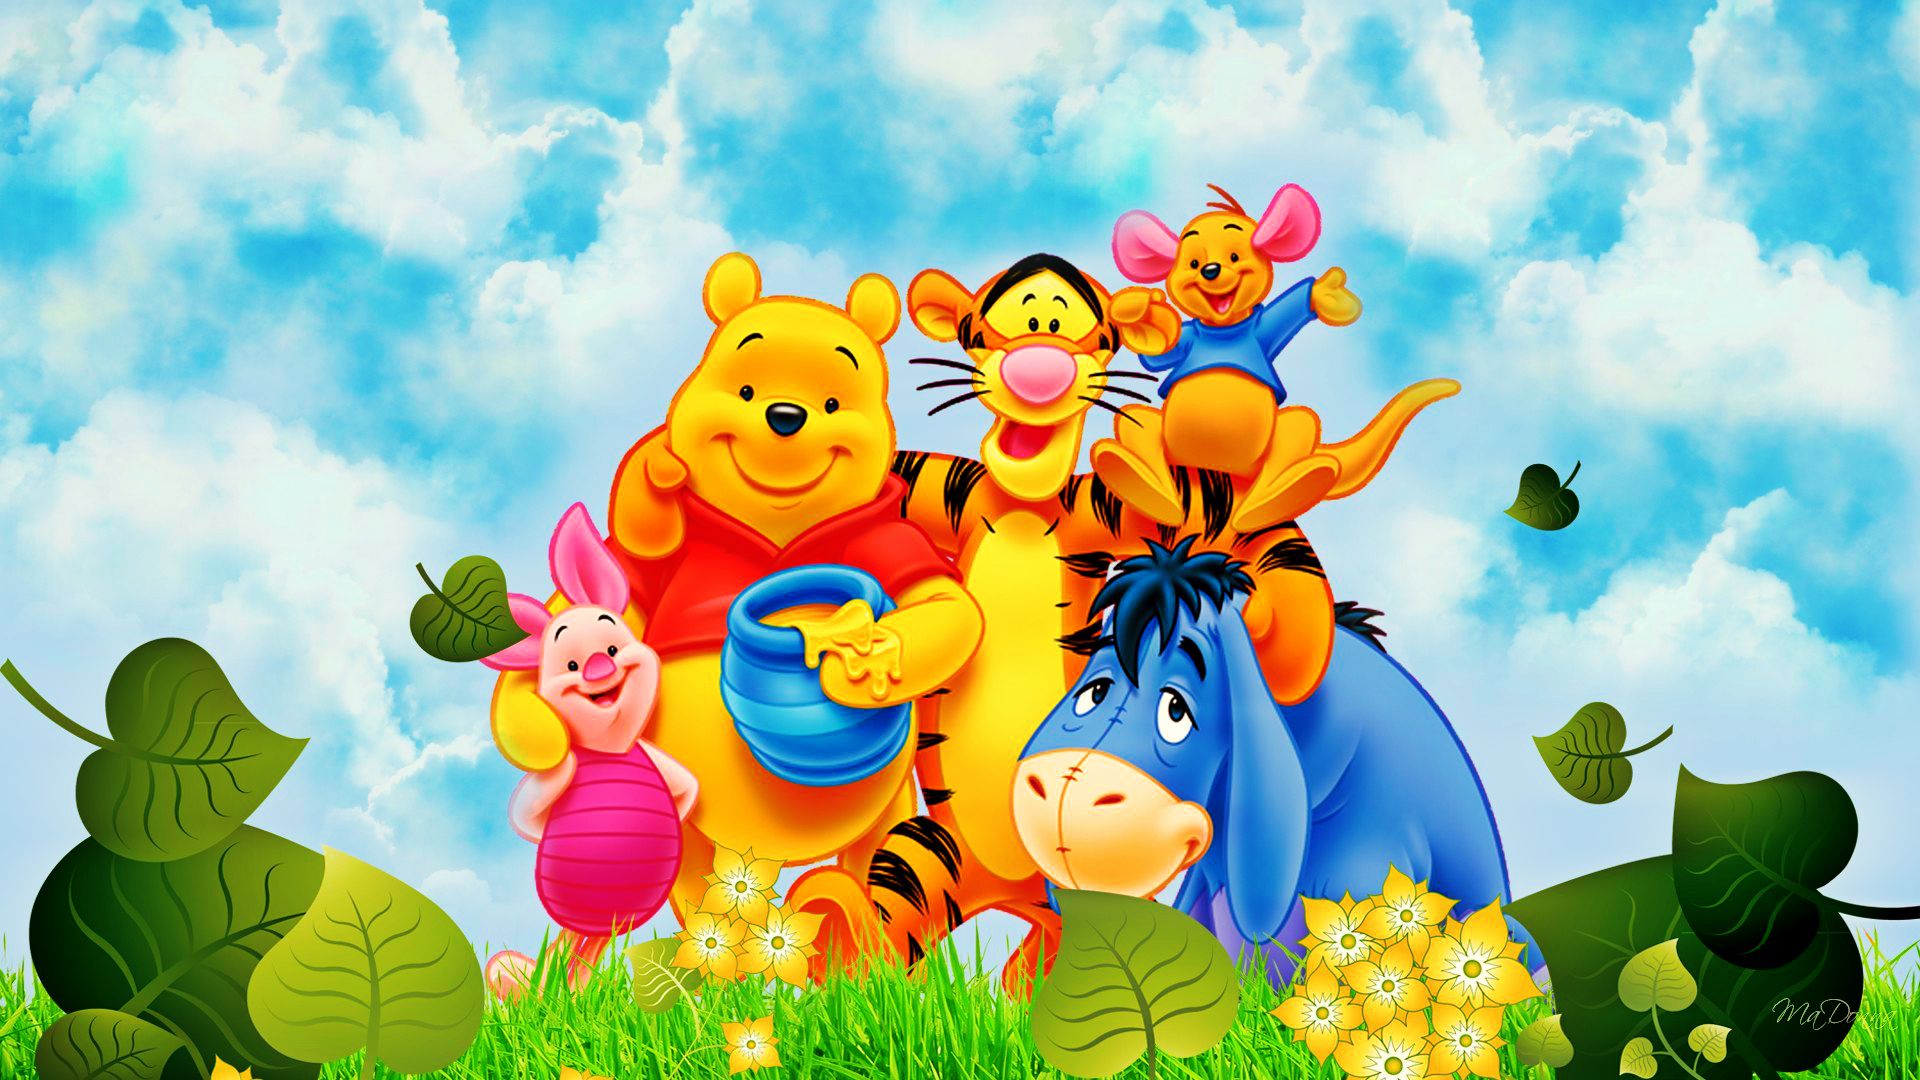 Winnie the Pooh Friendship Day Wallpaper